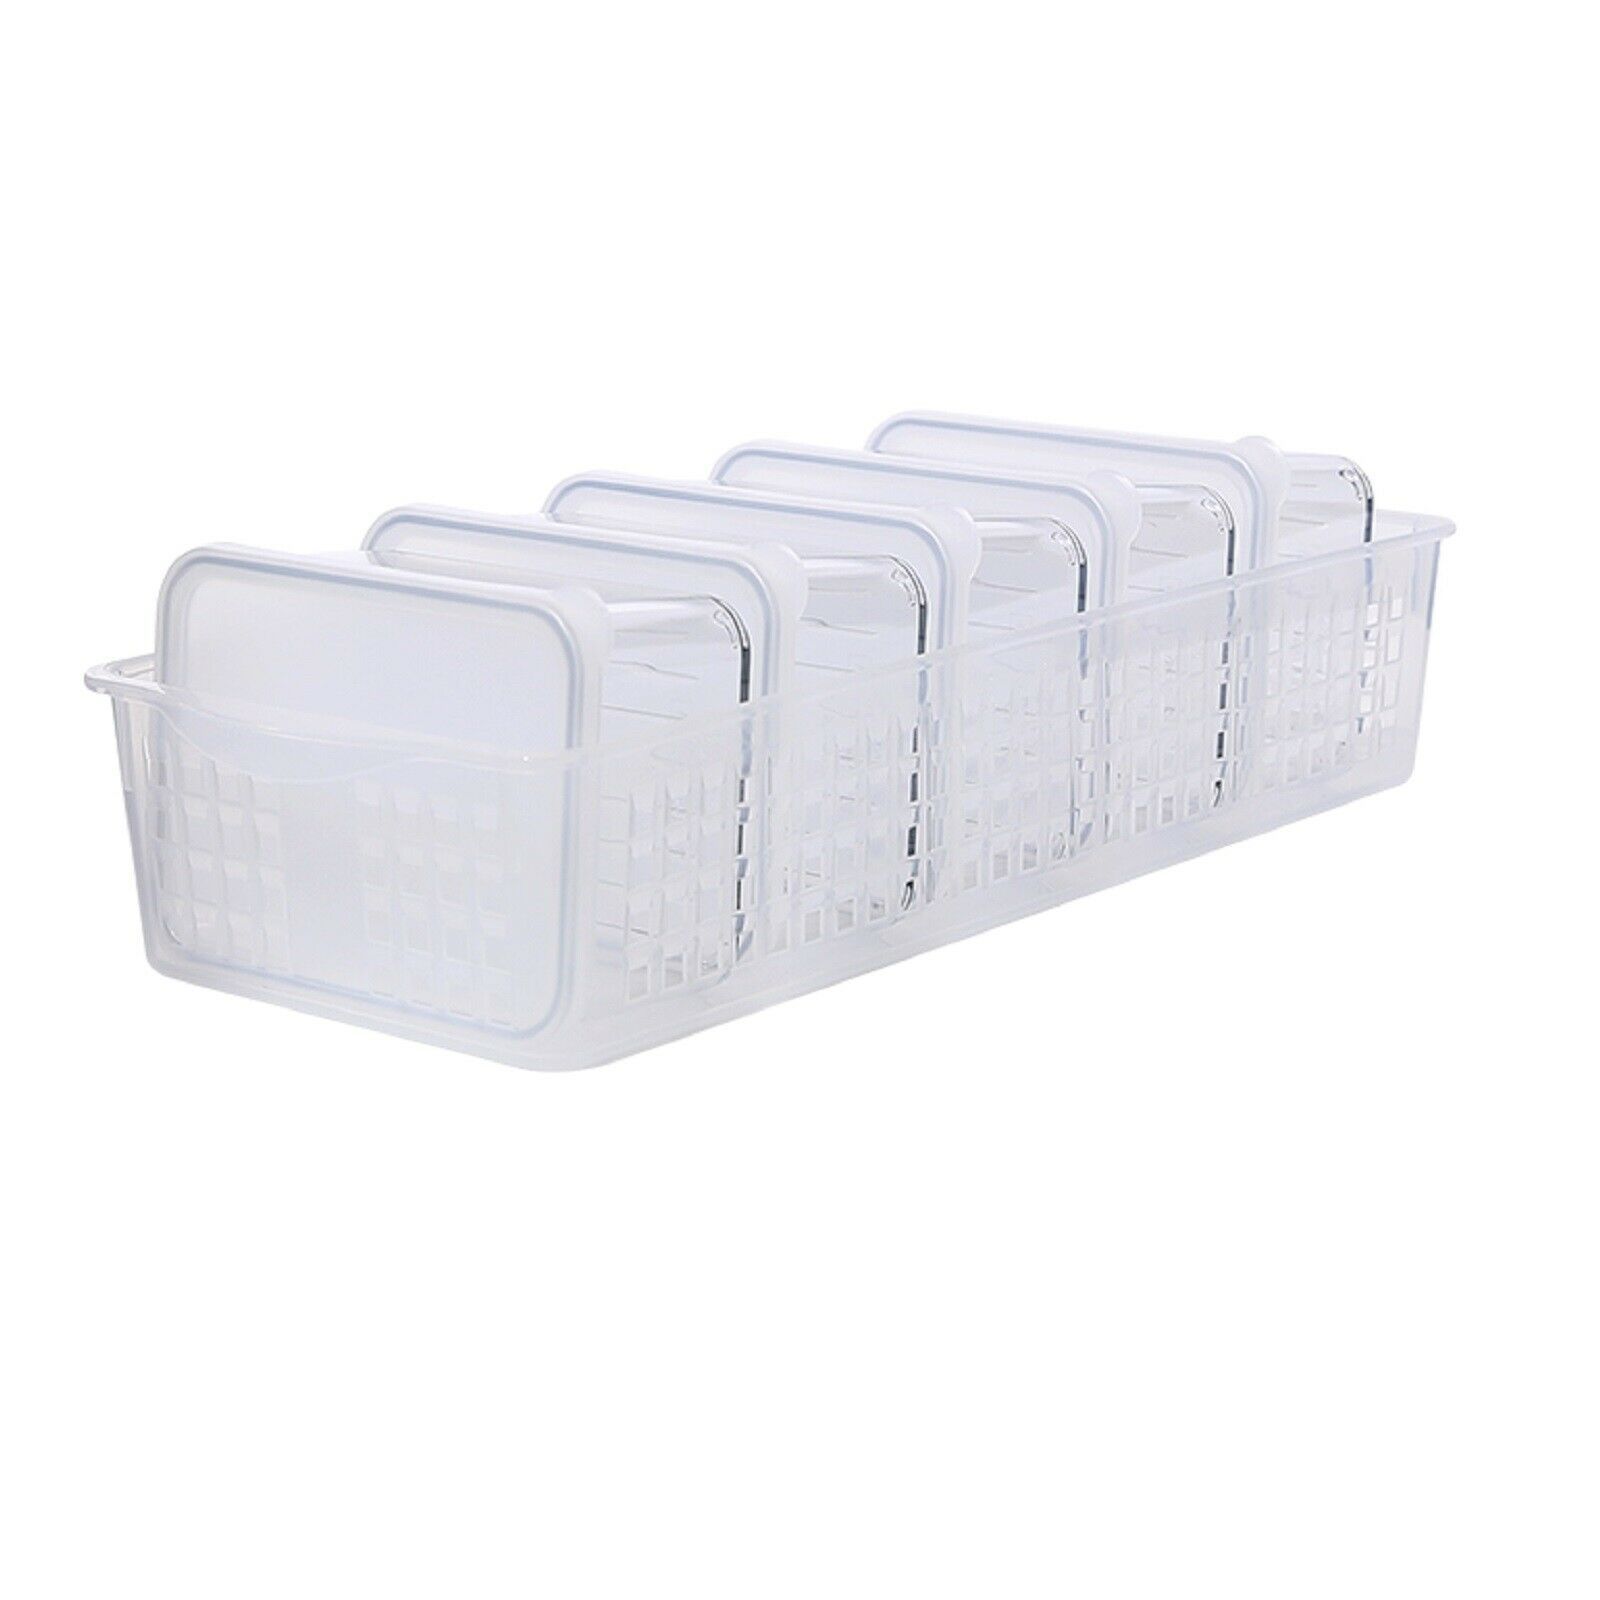 Silicook Garlic Onion Cube Food Storage Container Freezer Organizer (5 counts)